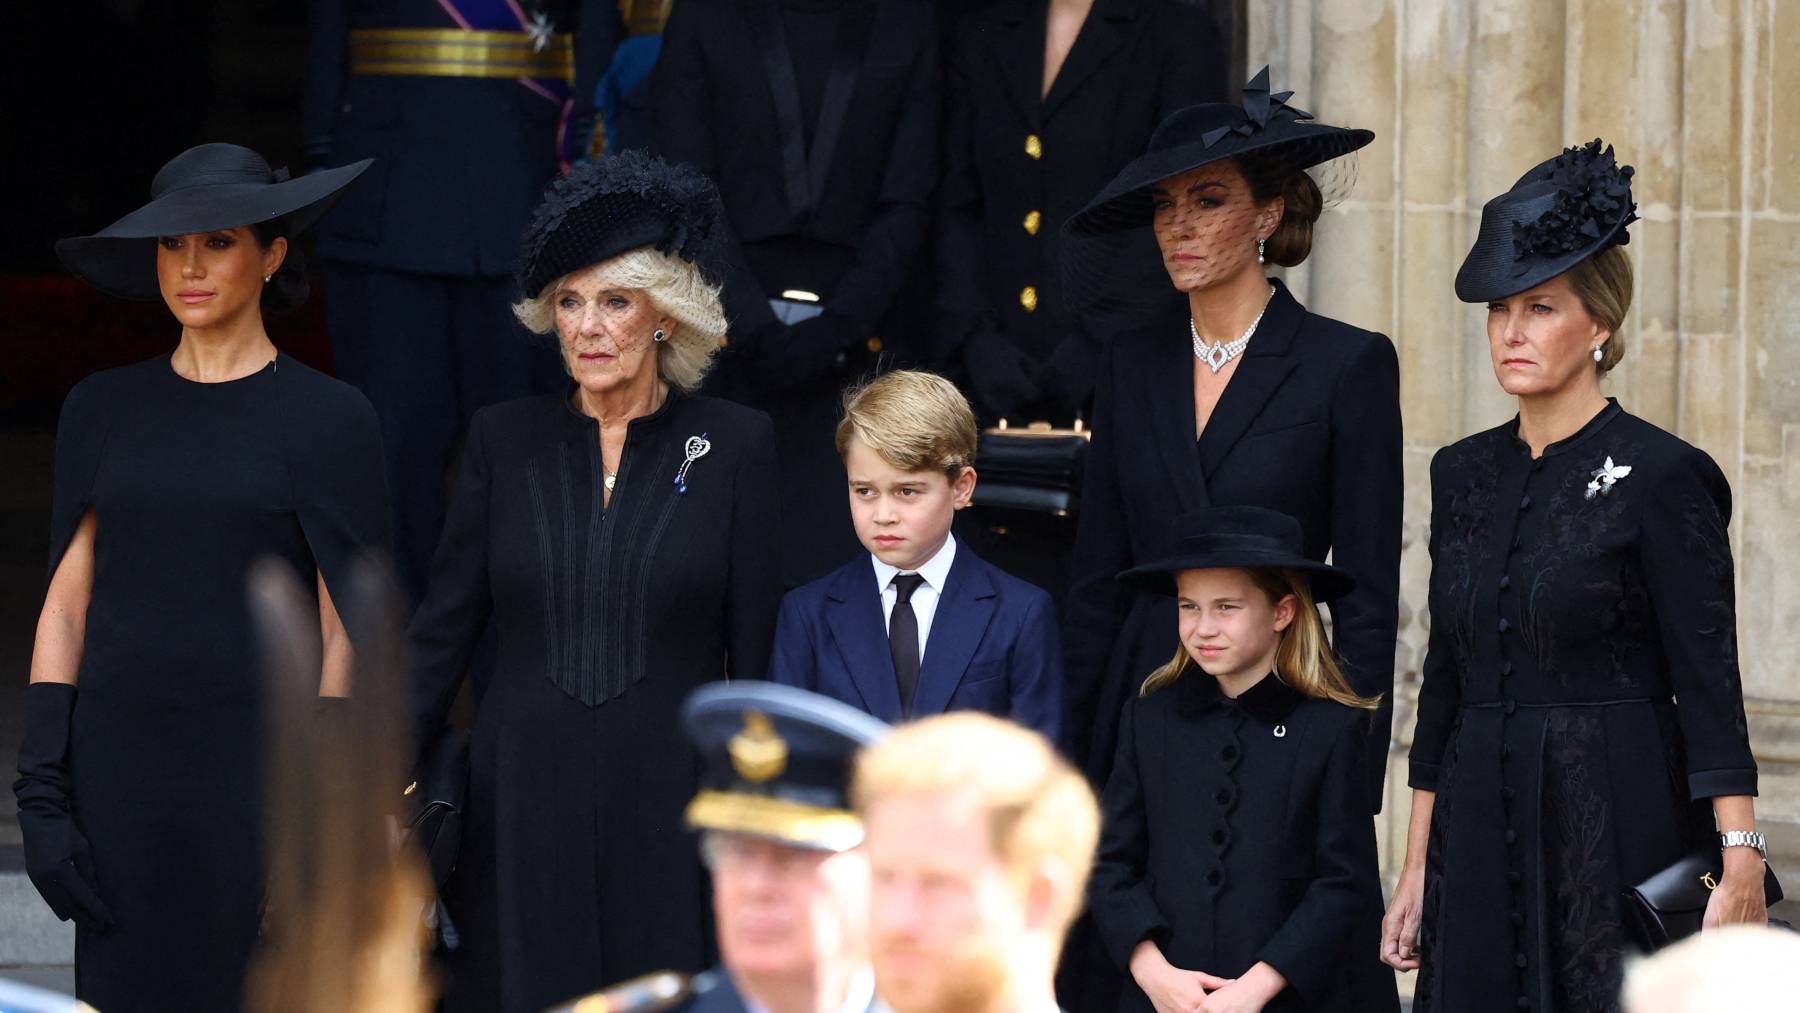 Royal women dressed in black for the funeral of Queen Elizabeth II.